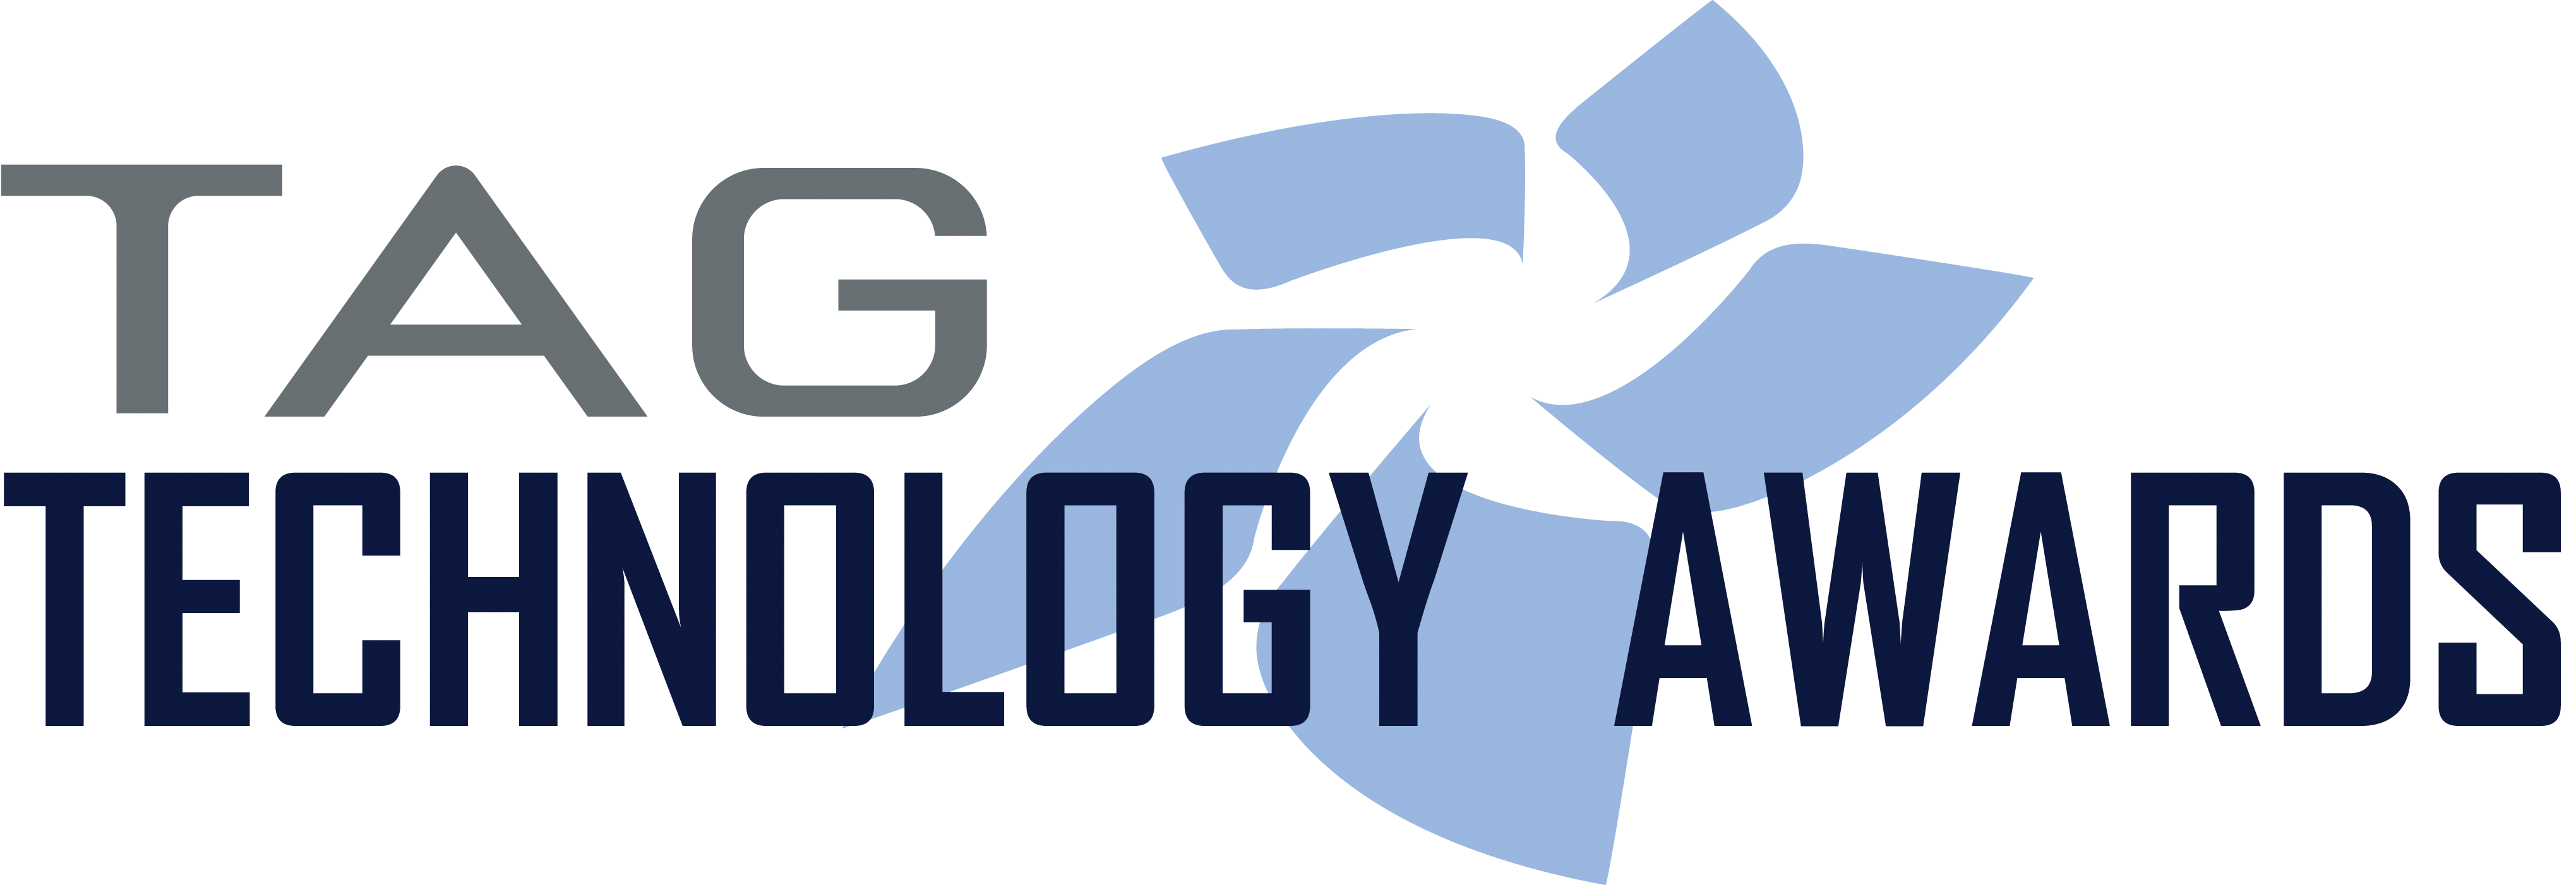 TAG-Technology-Awards-Logo-color-no-year-min